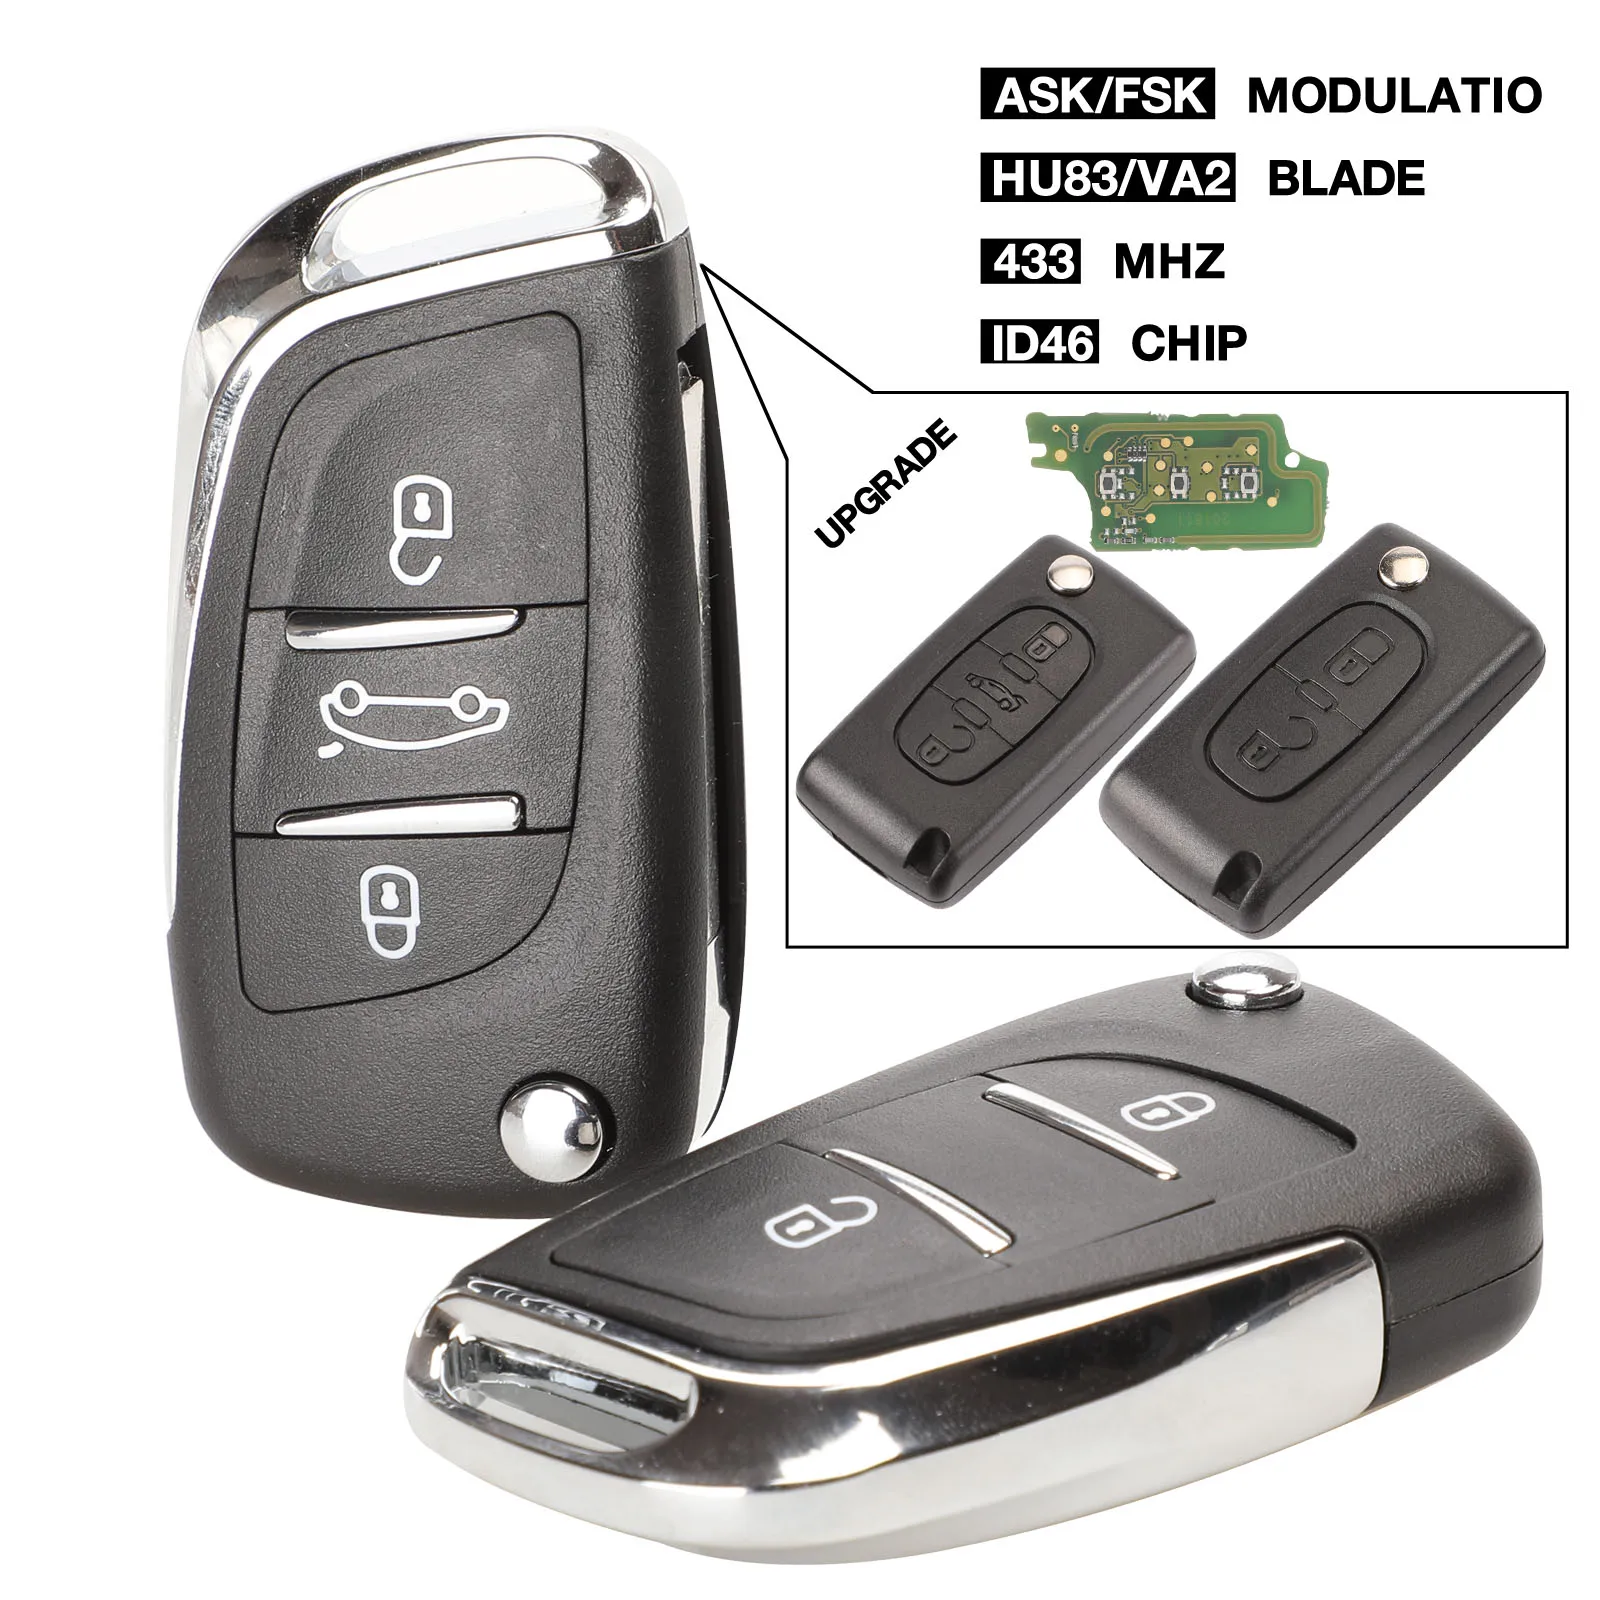 jingyuqin ASK/FSK 433MHz ID46 Chip CE0523 Modified Flip Remote Key Fob for Peugeot 307 407 607 HU83/ VA2 Blade 2 3 Button Key